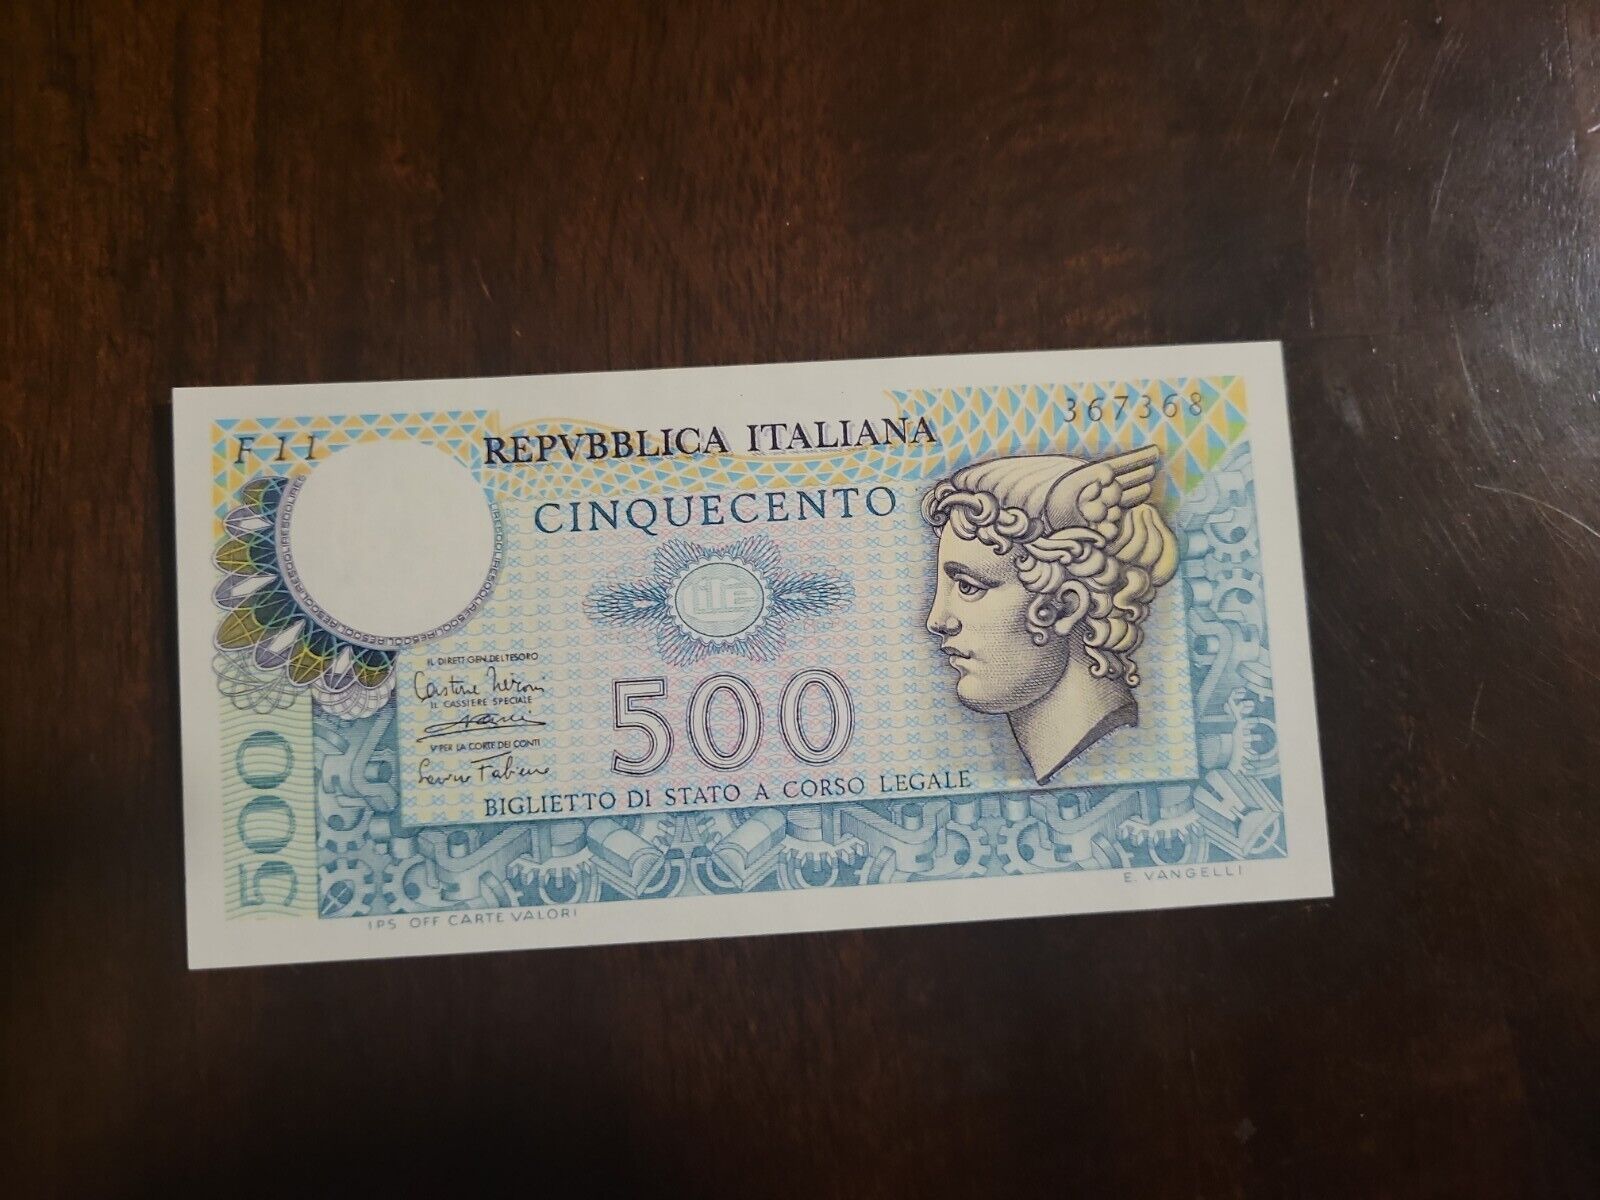 Repvbblica Italiana 500 Cinquecento Paper Money